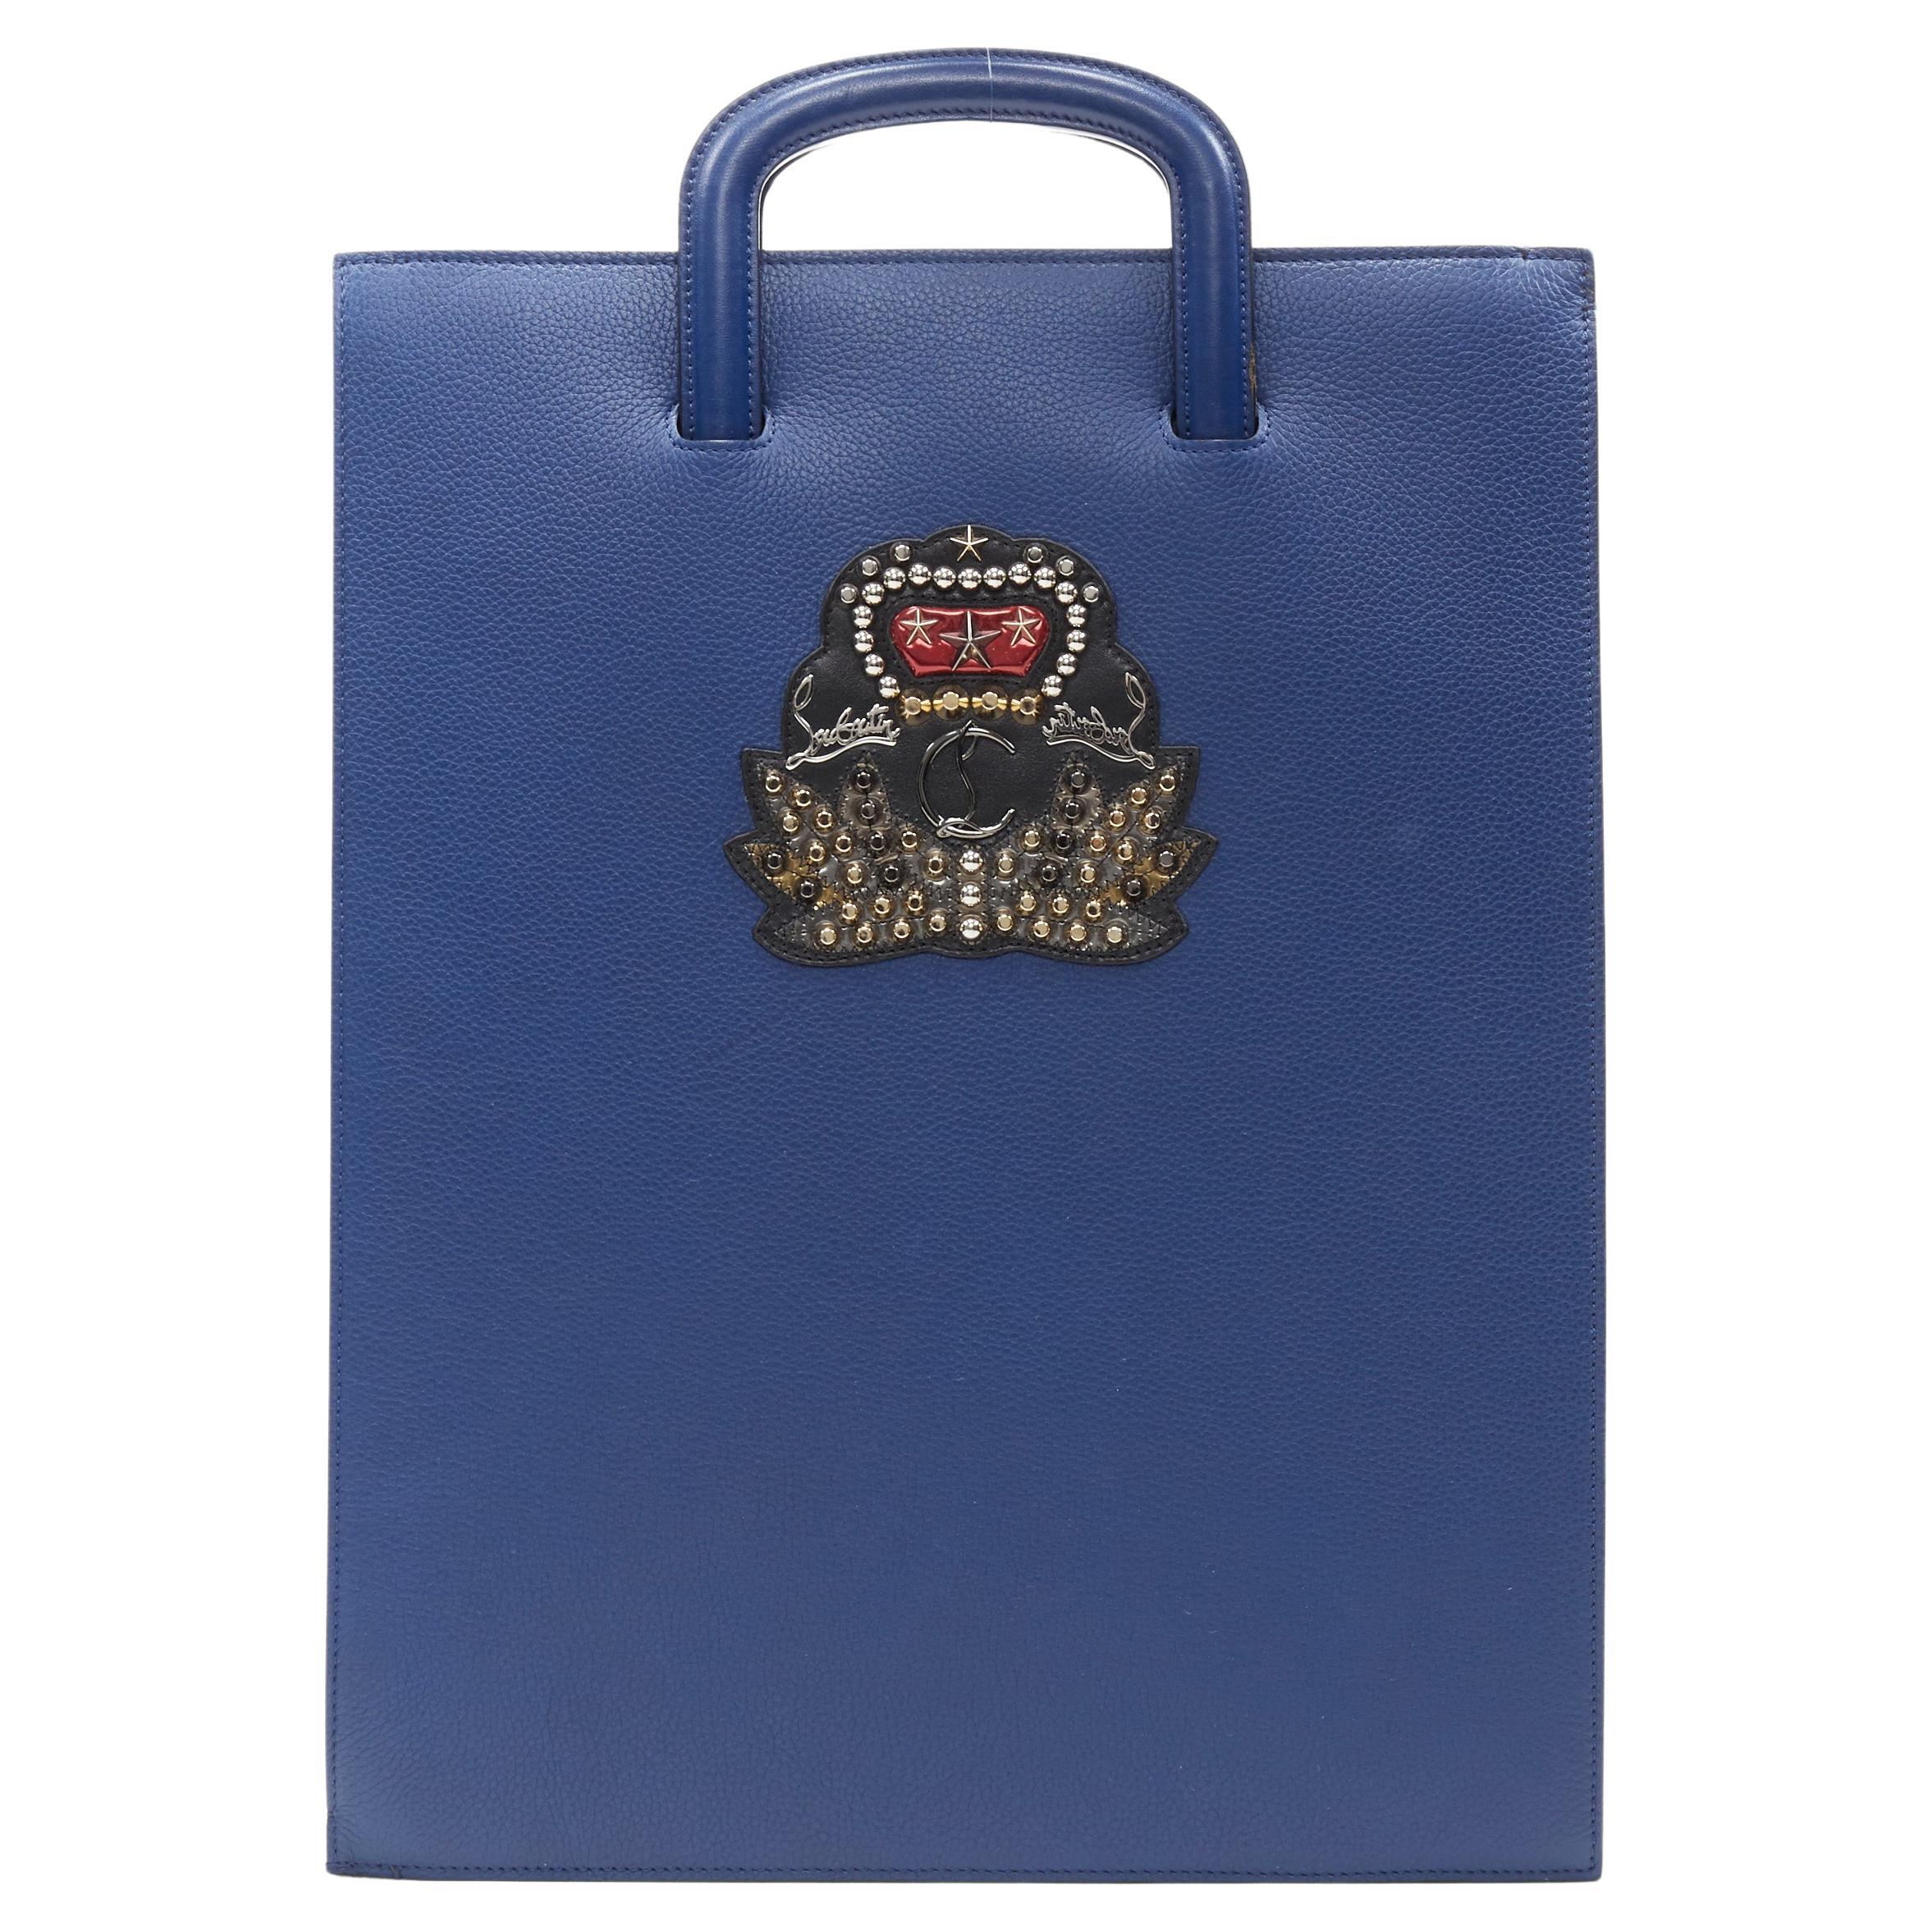 CHRISTIAN LOUBOUTIN Trictrac blue crest studded leather side zip portfolio bag For Sale